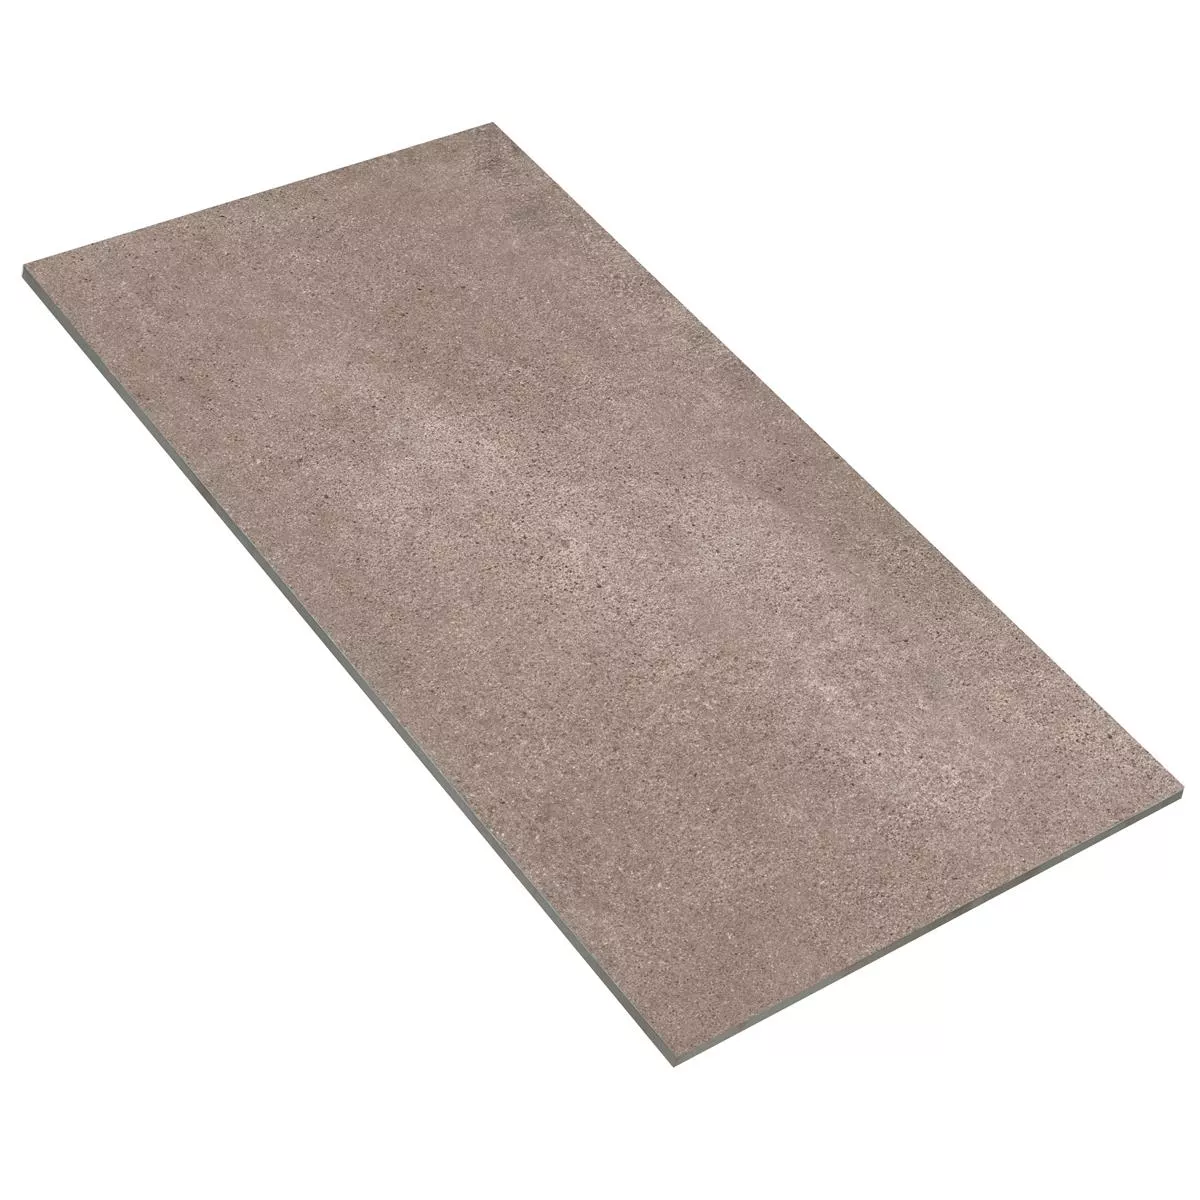 Sample Floor Tiles Stone Optic Riad Mat R9 Brown 30x60cm 